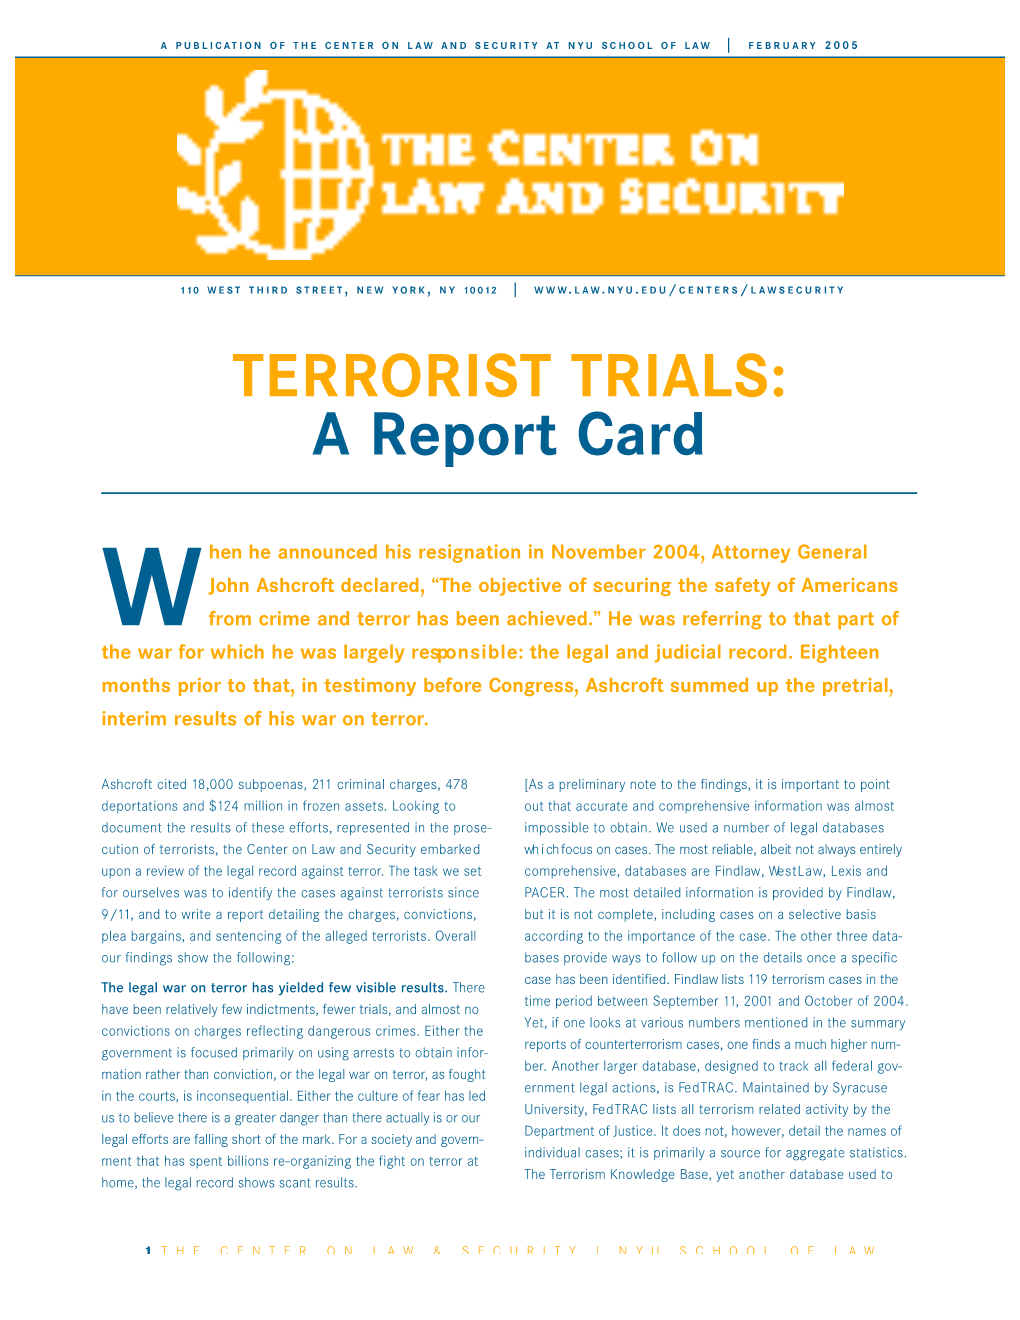 TERRORIST TRIALS: a Report Card